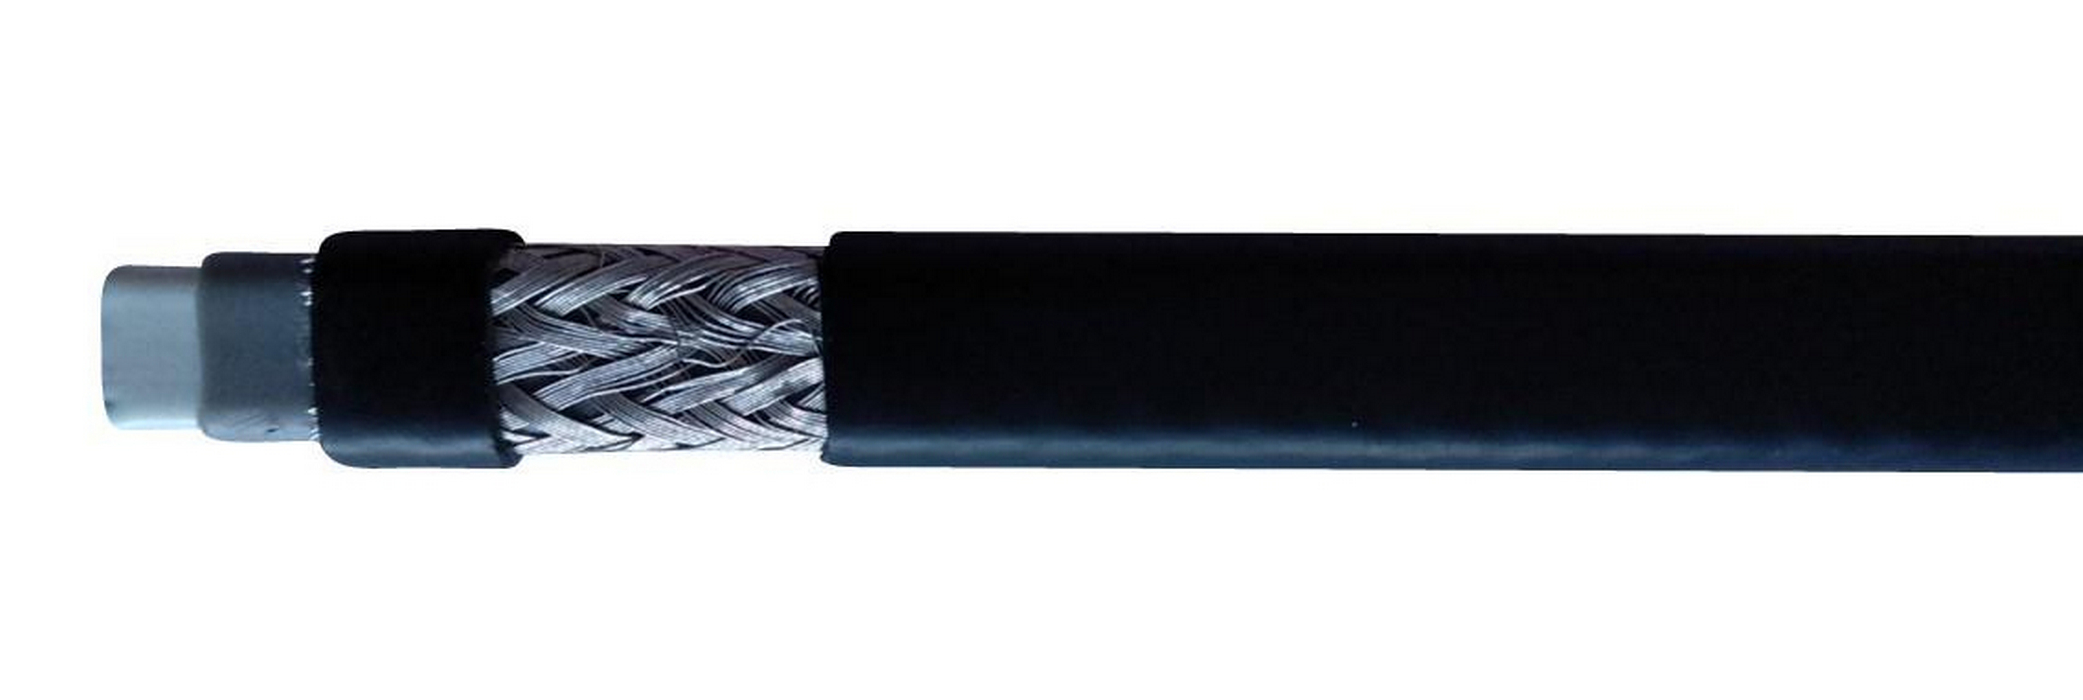 Саморегулирующийся кабель Ryxon LSR-40-CR (1 м.п.) цена 321.00 грн - фотография 2